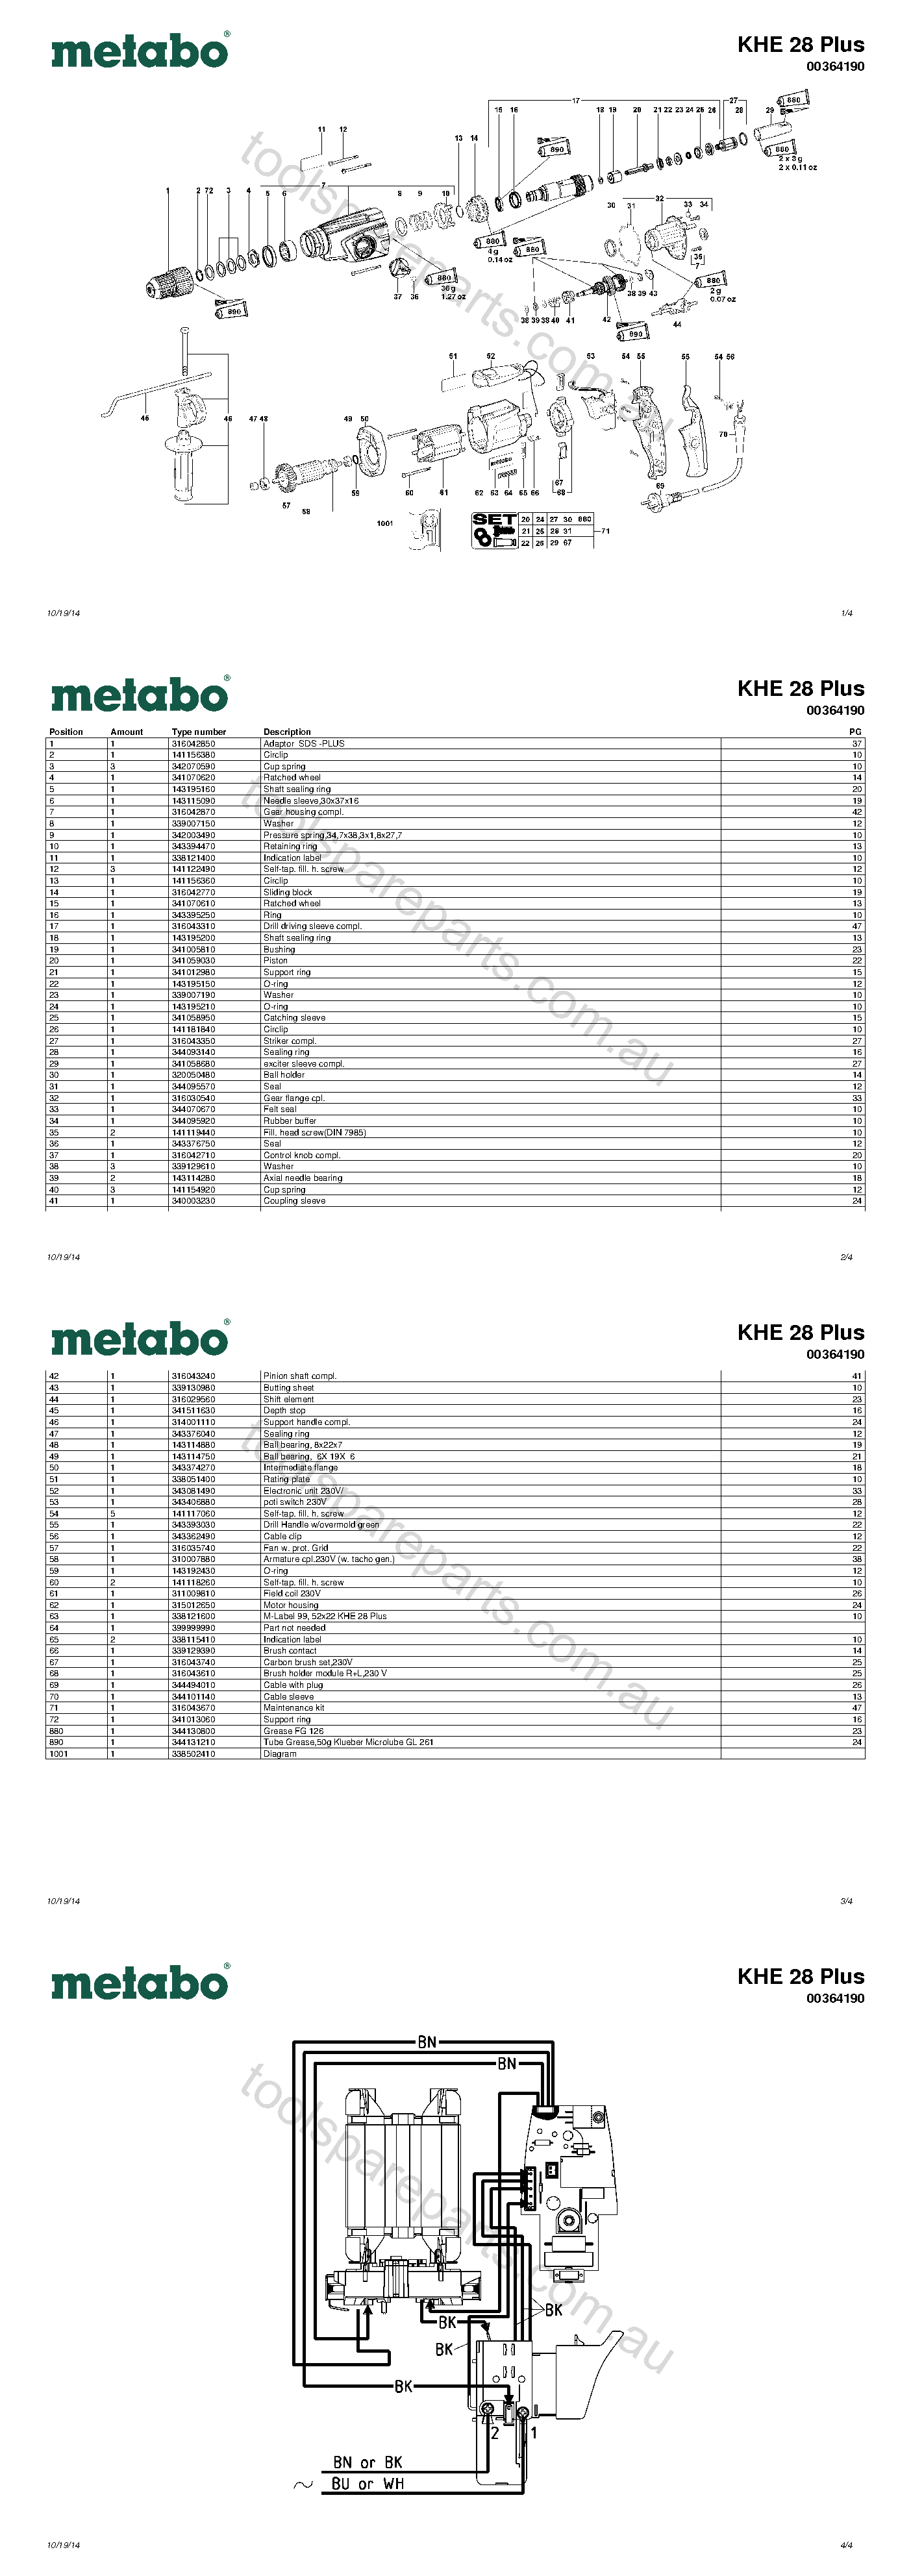 Metabo KHE 28 Plus 00364190  Diagram 1